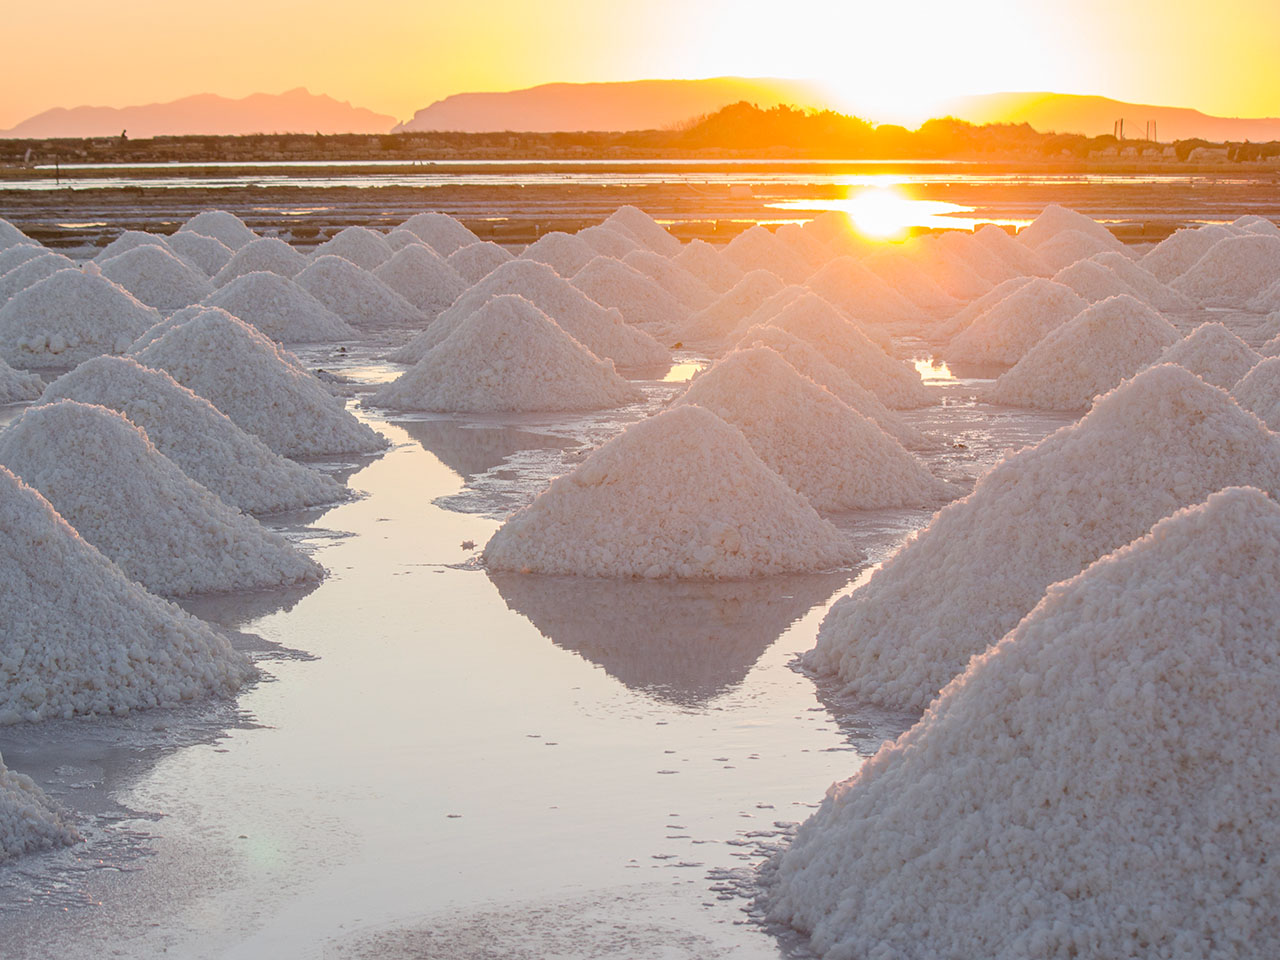 Marsala salt pans at sunset